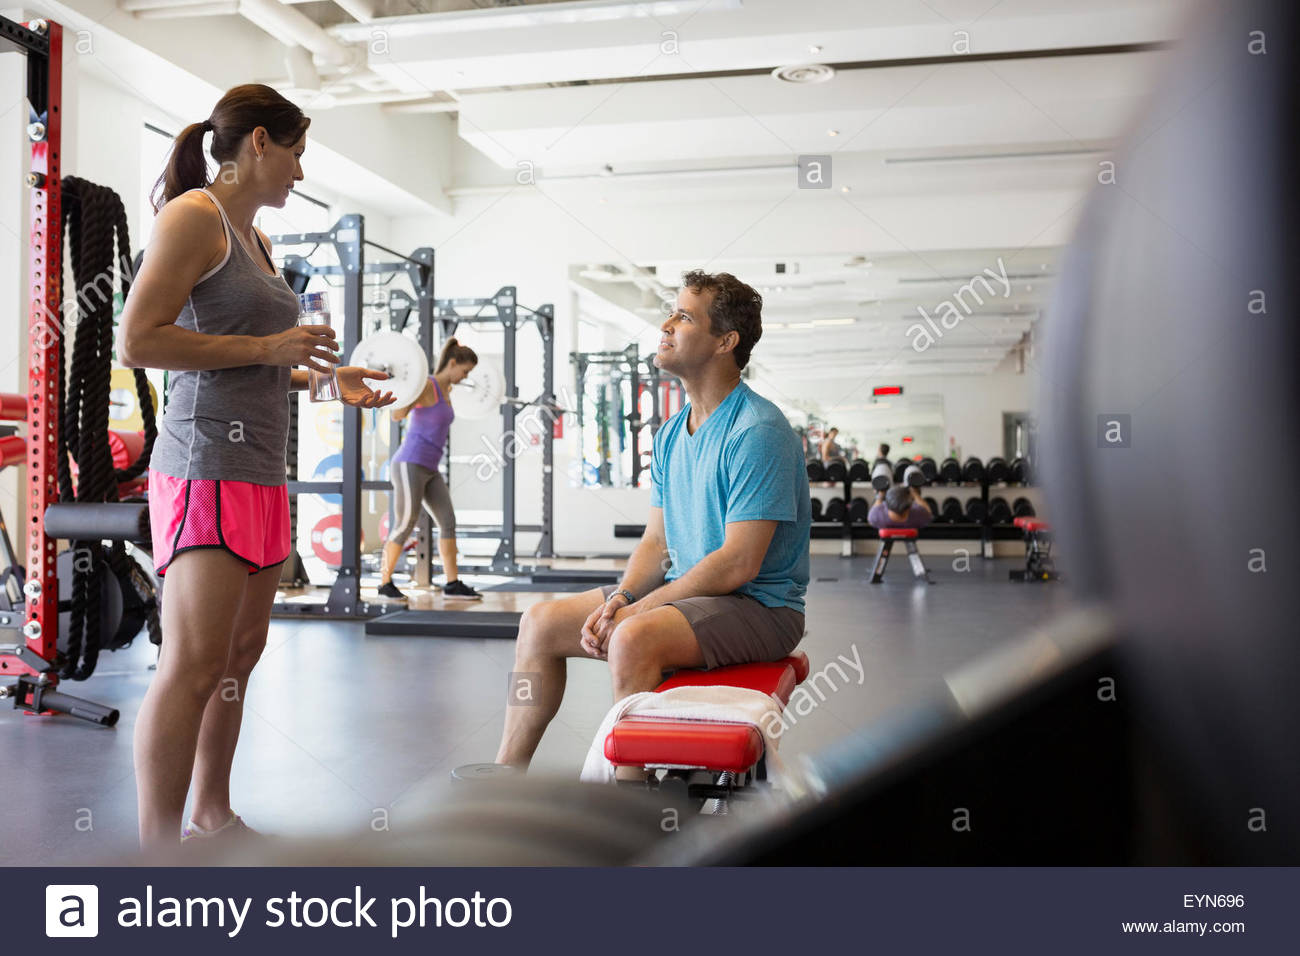 Man and woman talking at gym Stock Photo